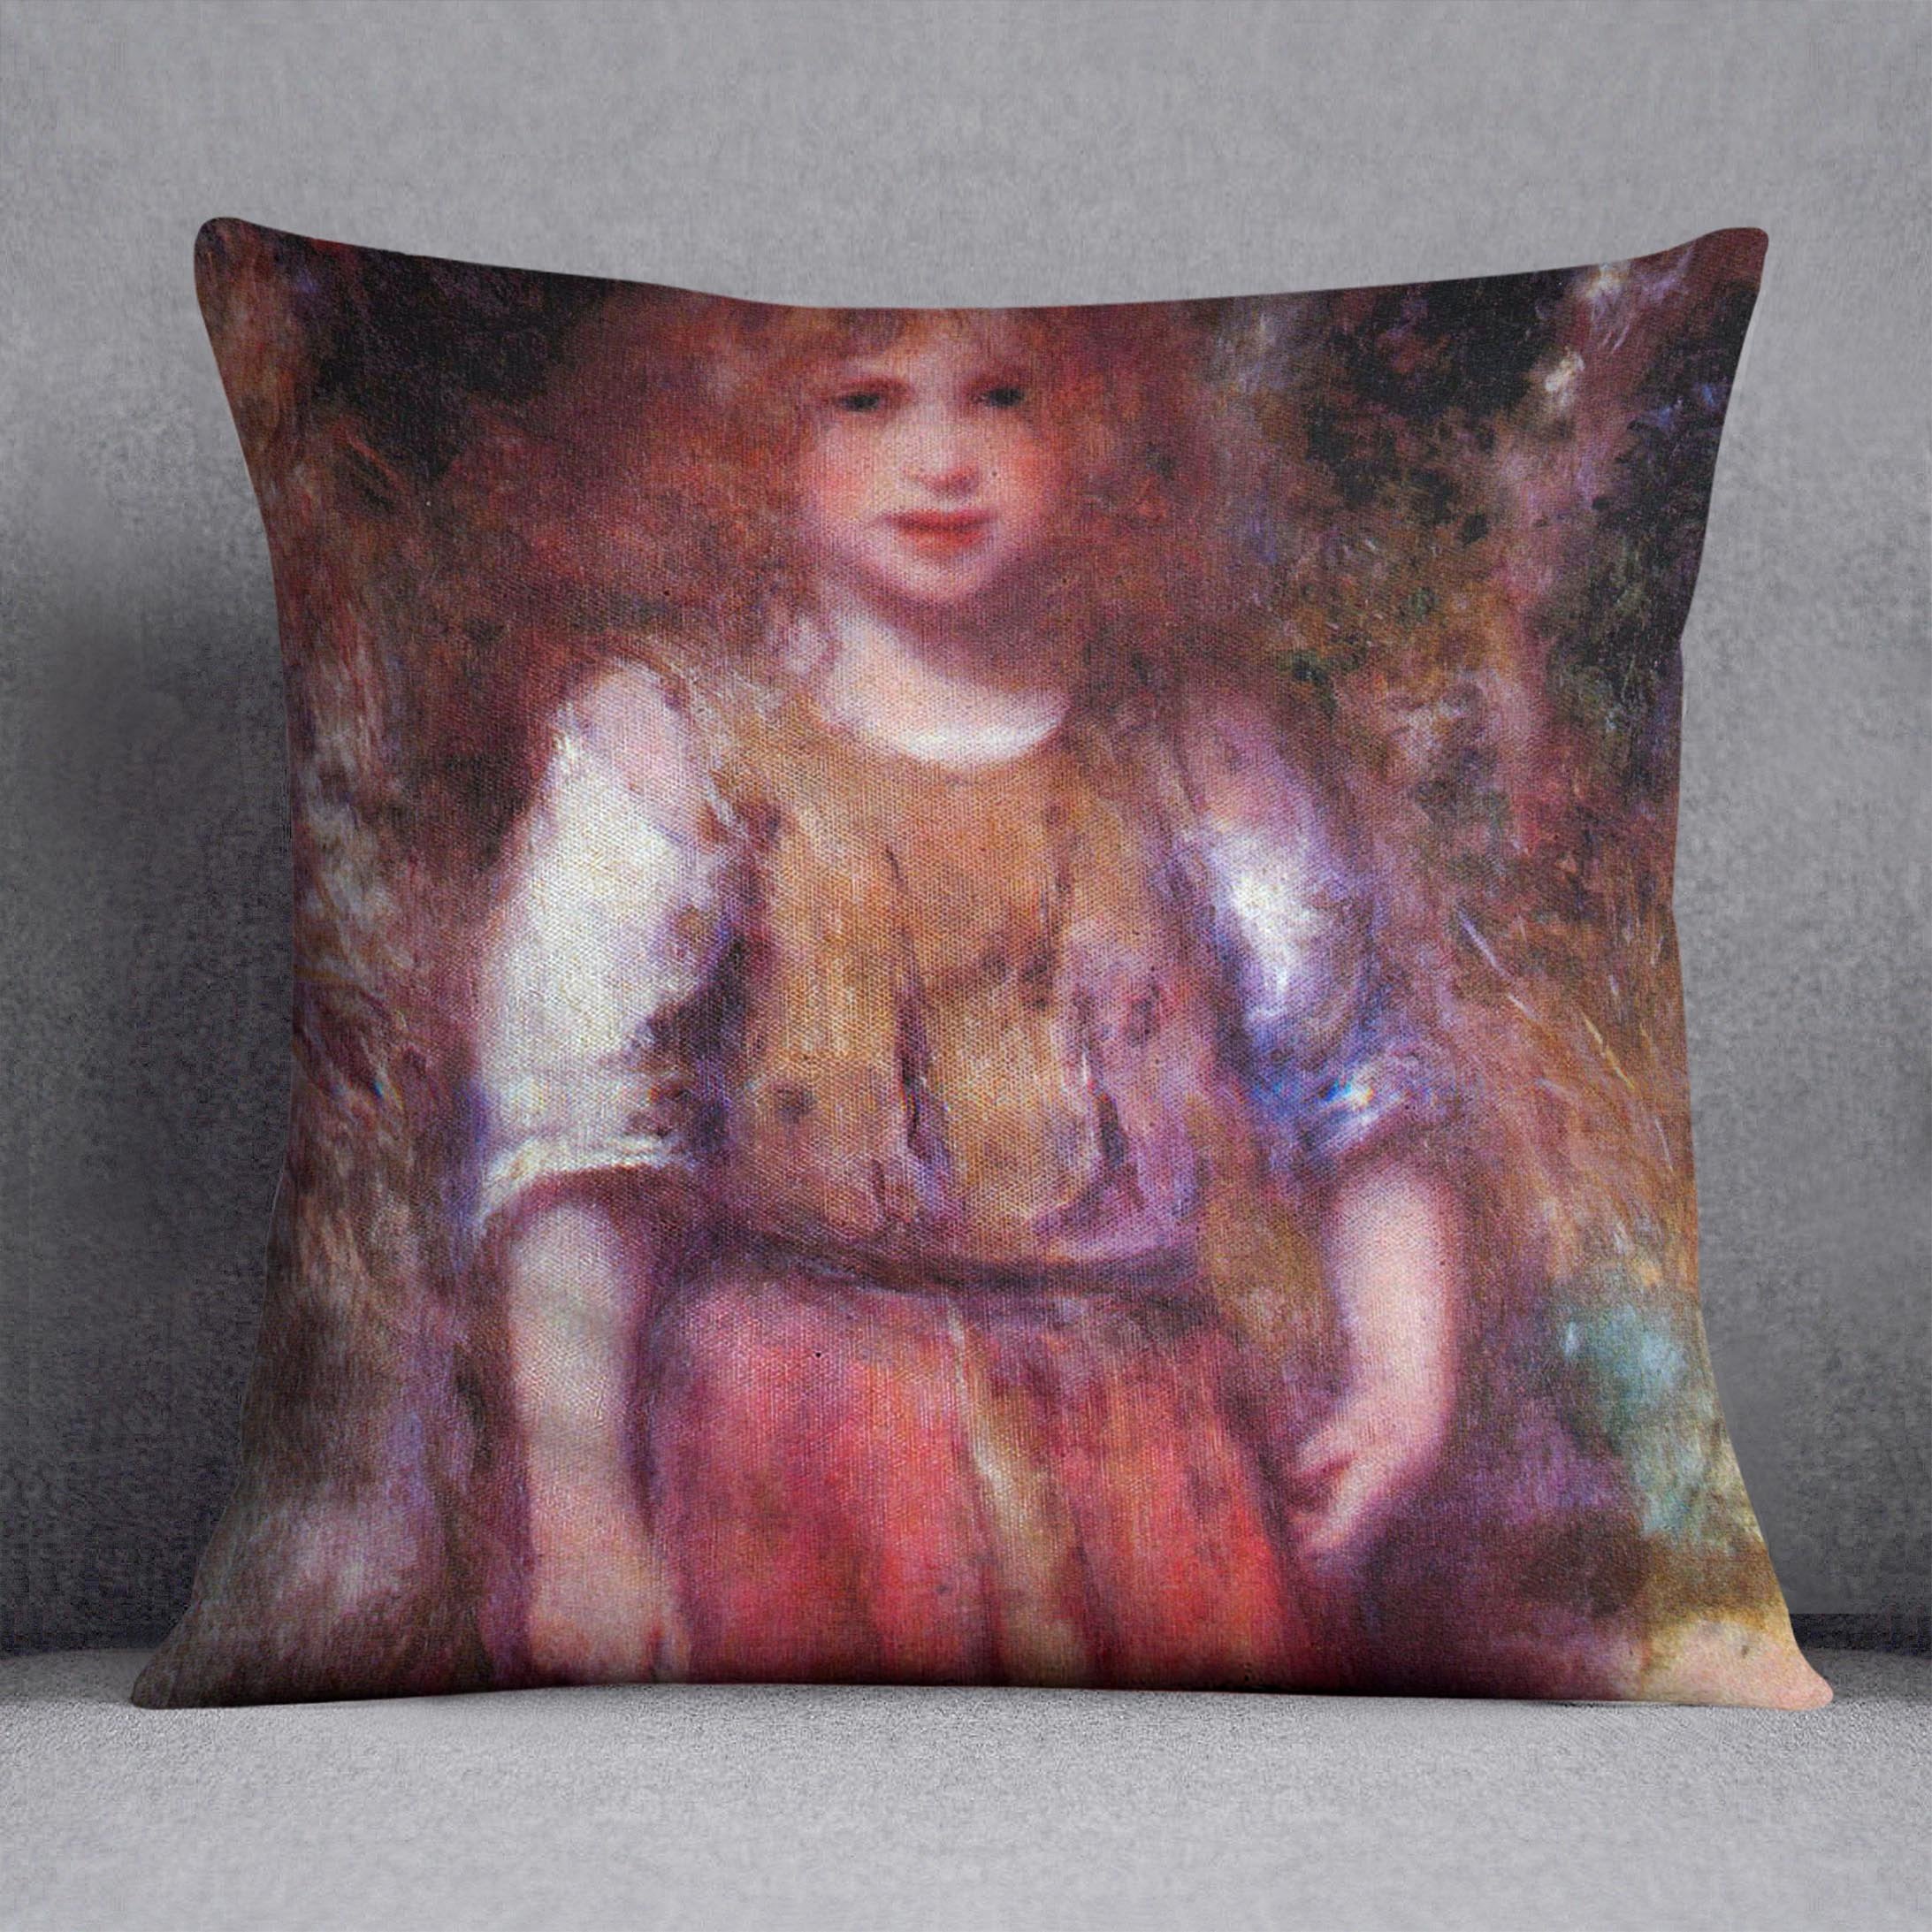 Gypsy girl by Renoir Throw Pillow